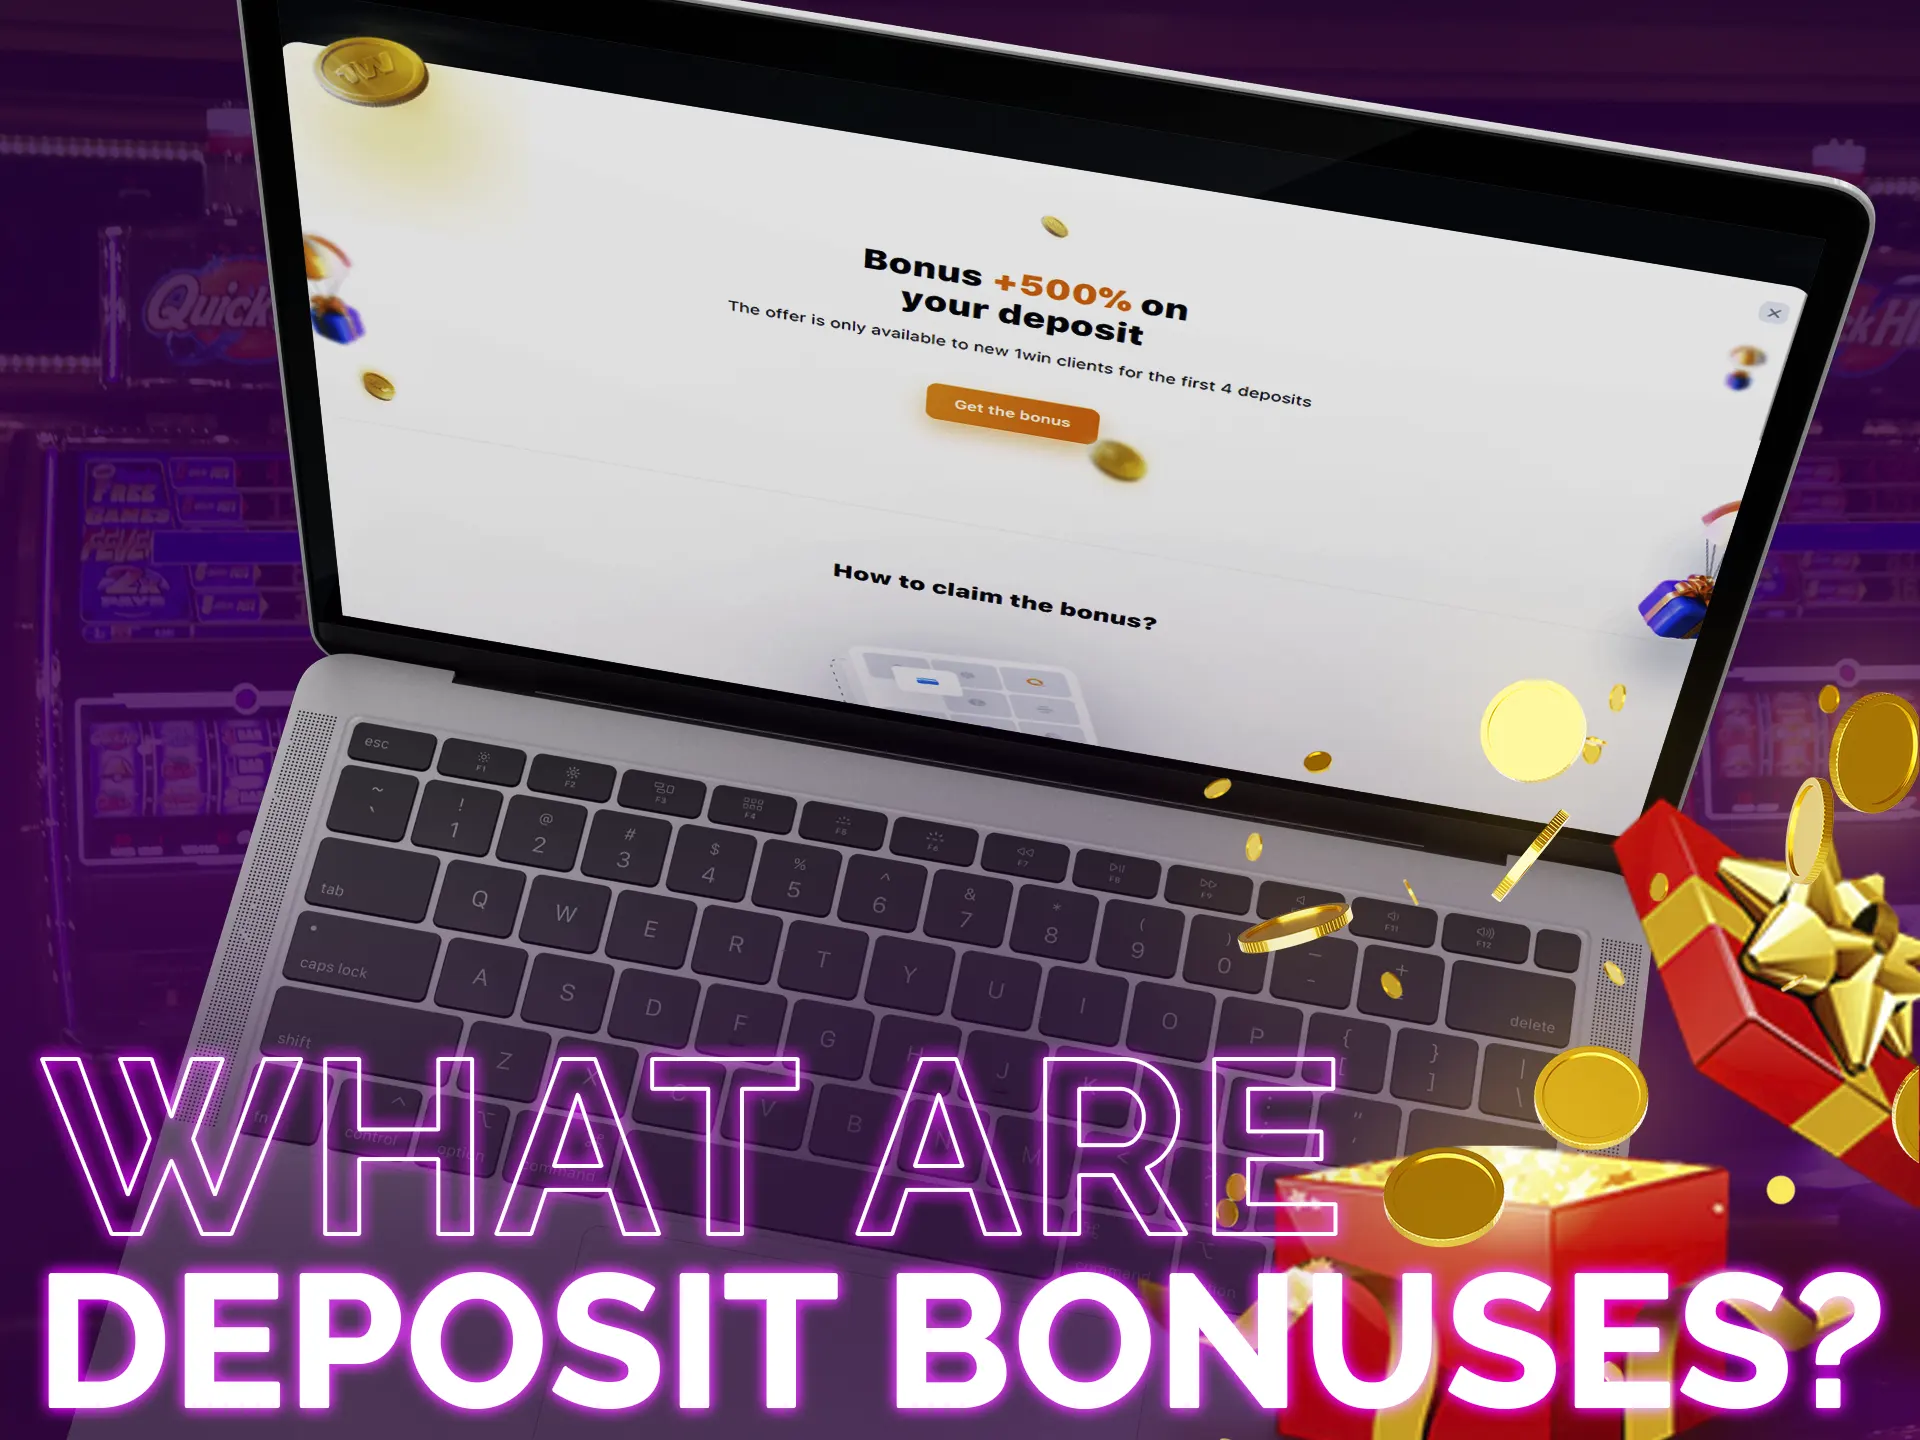 Learn what deposit bonuses are.